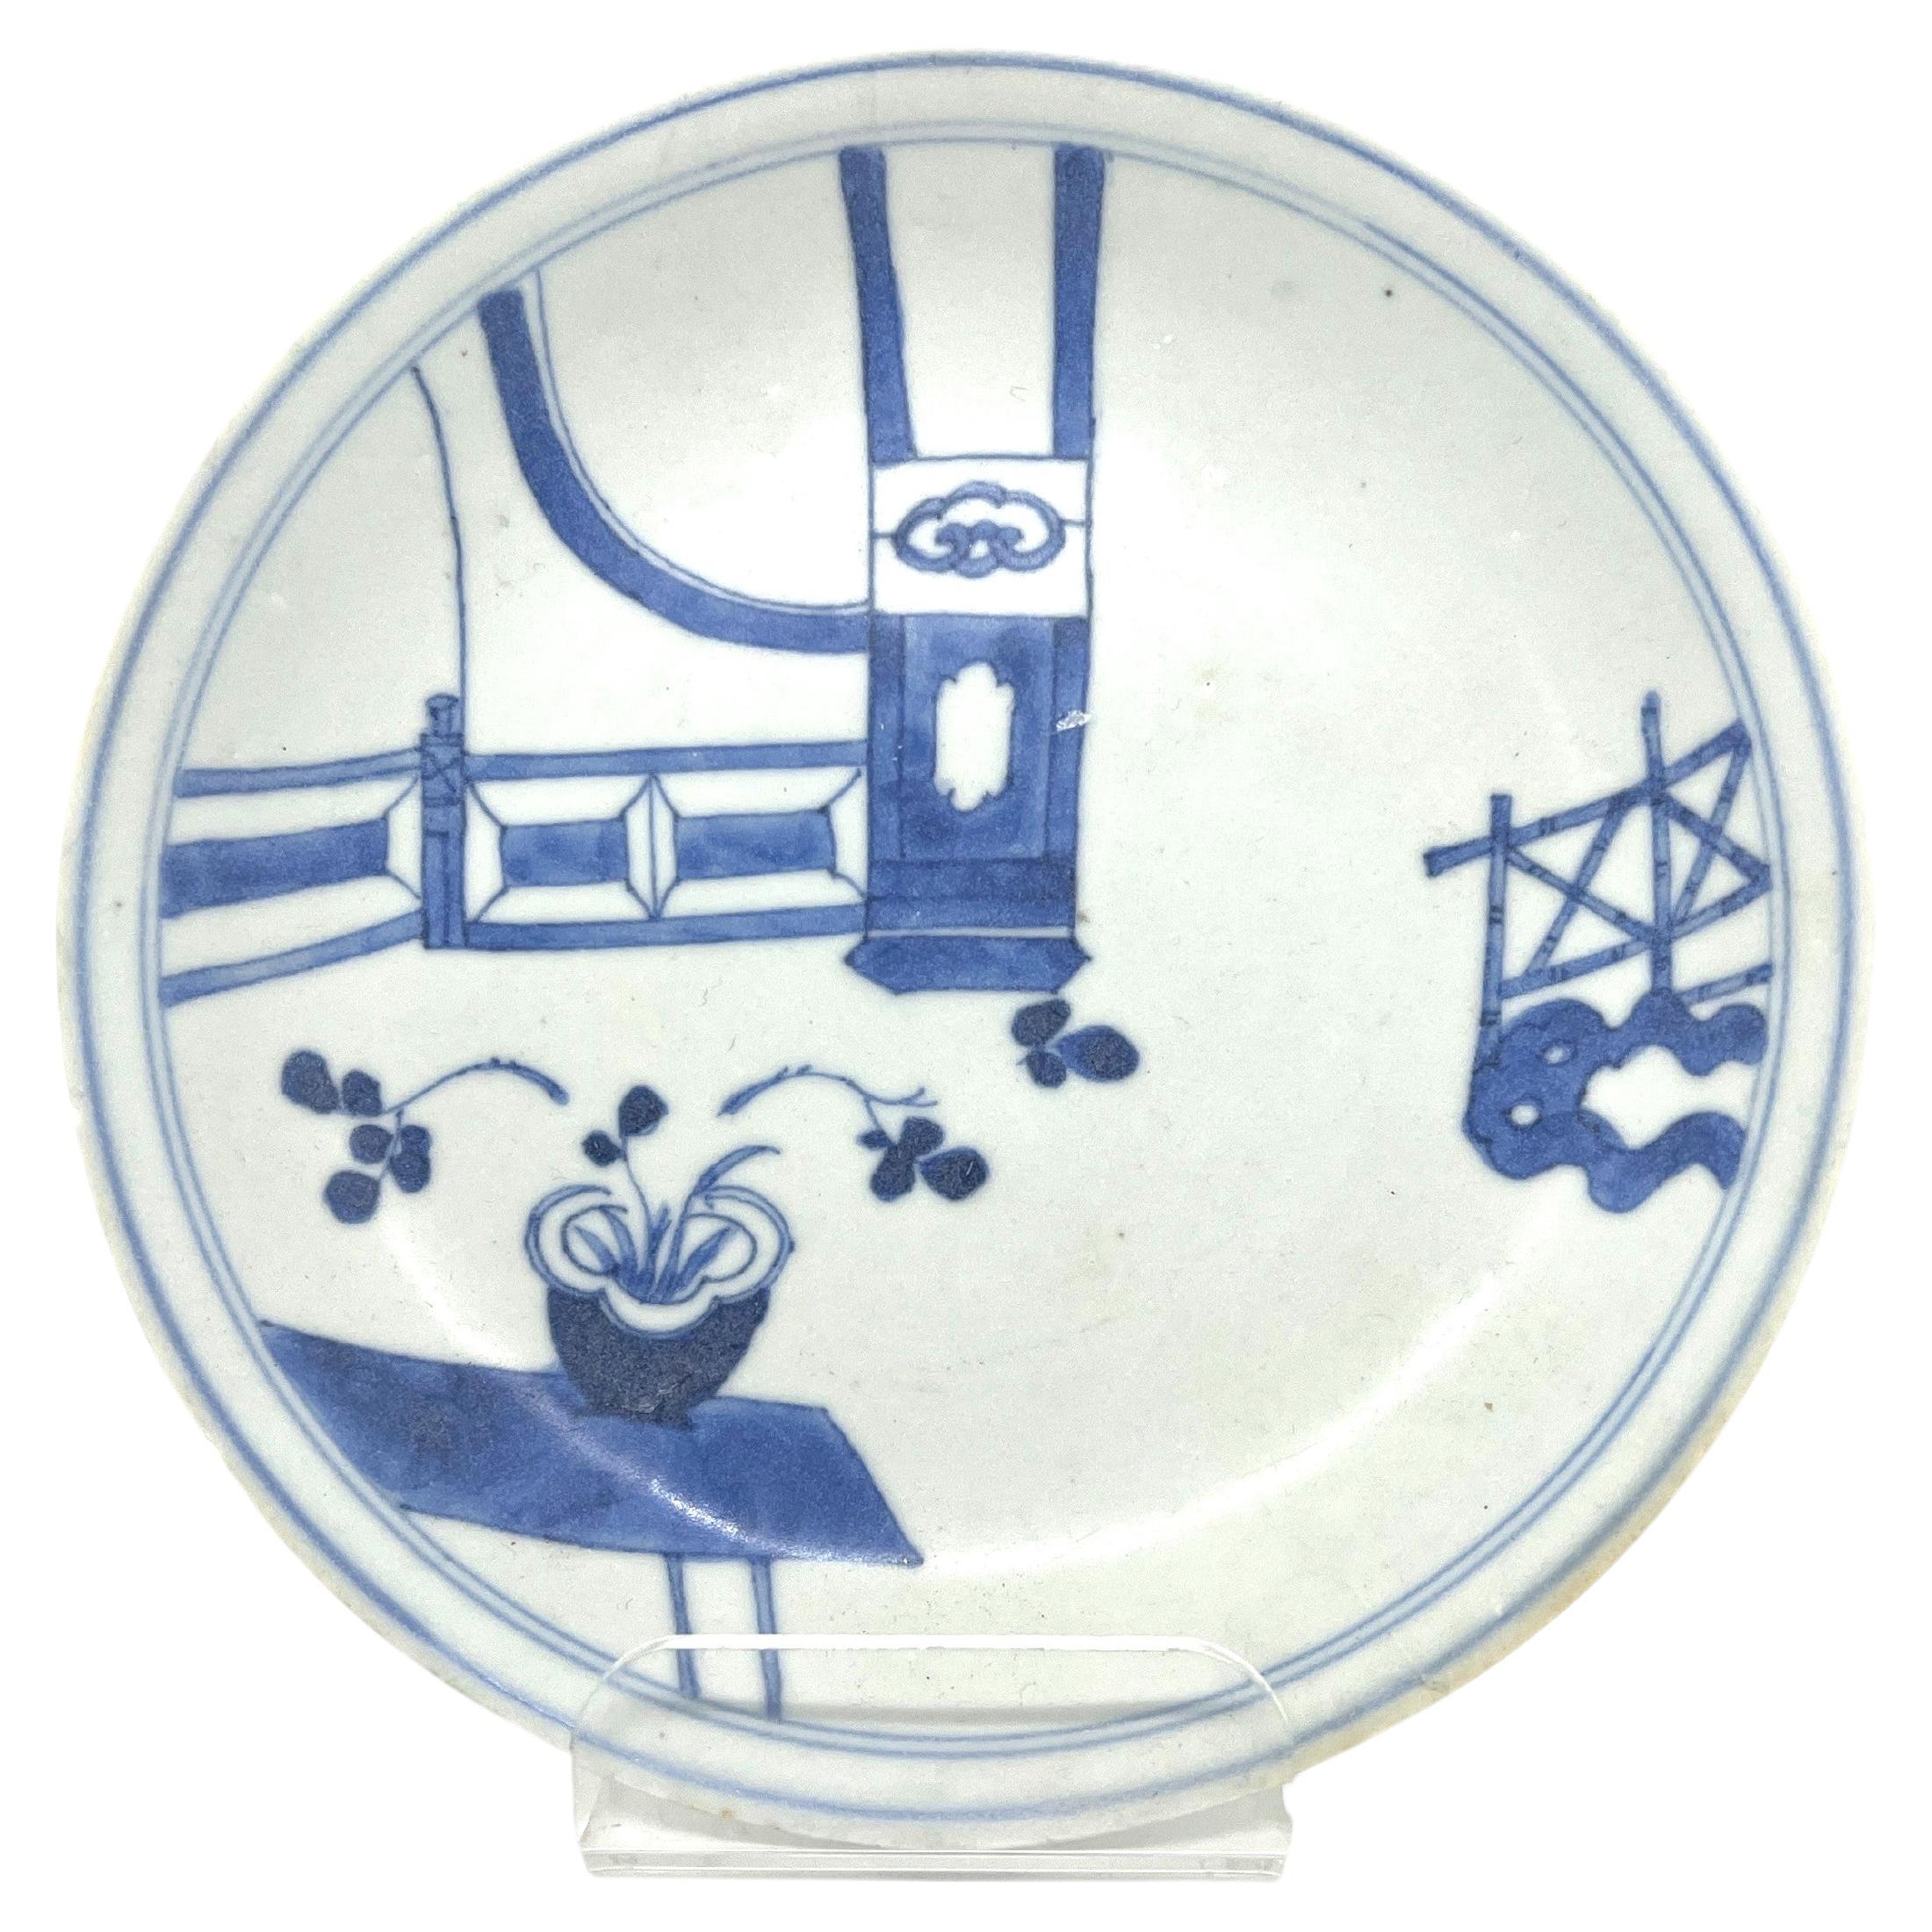 'Imari Pavilion' Pattern Blue And White Dish C 1725, Qing Dynasty, Yongzheng Era